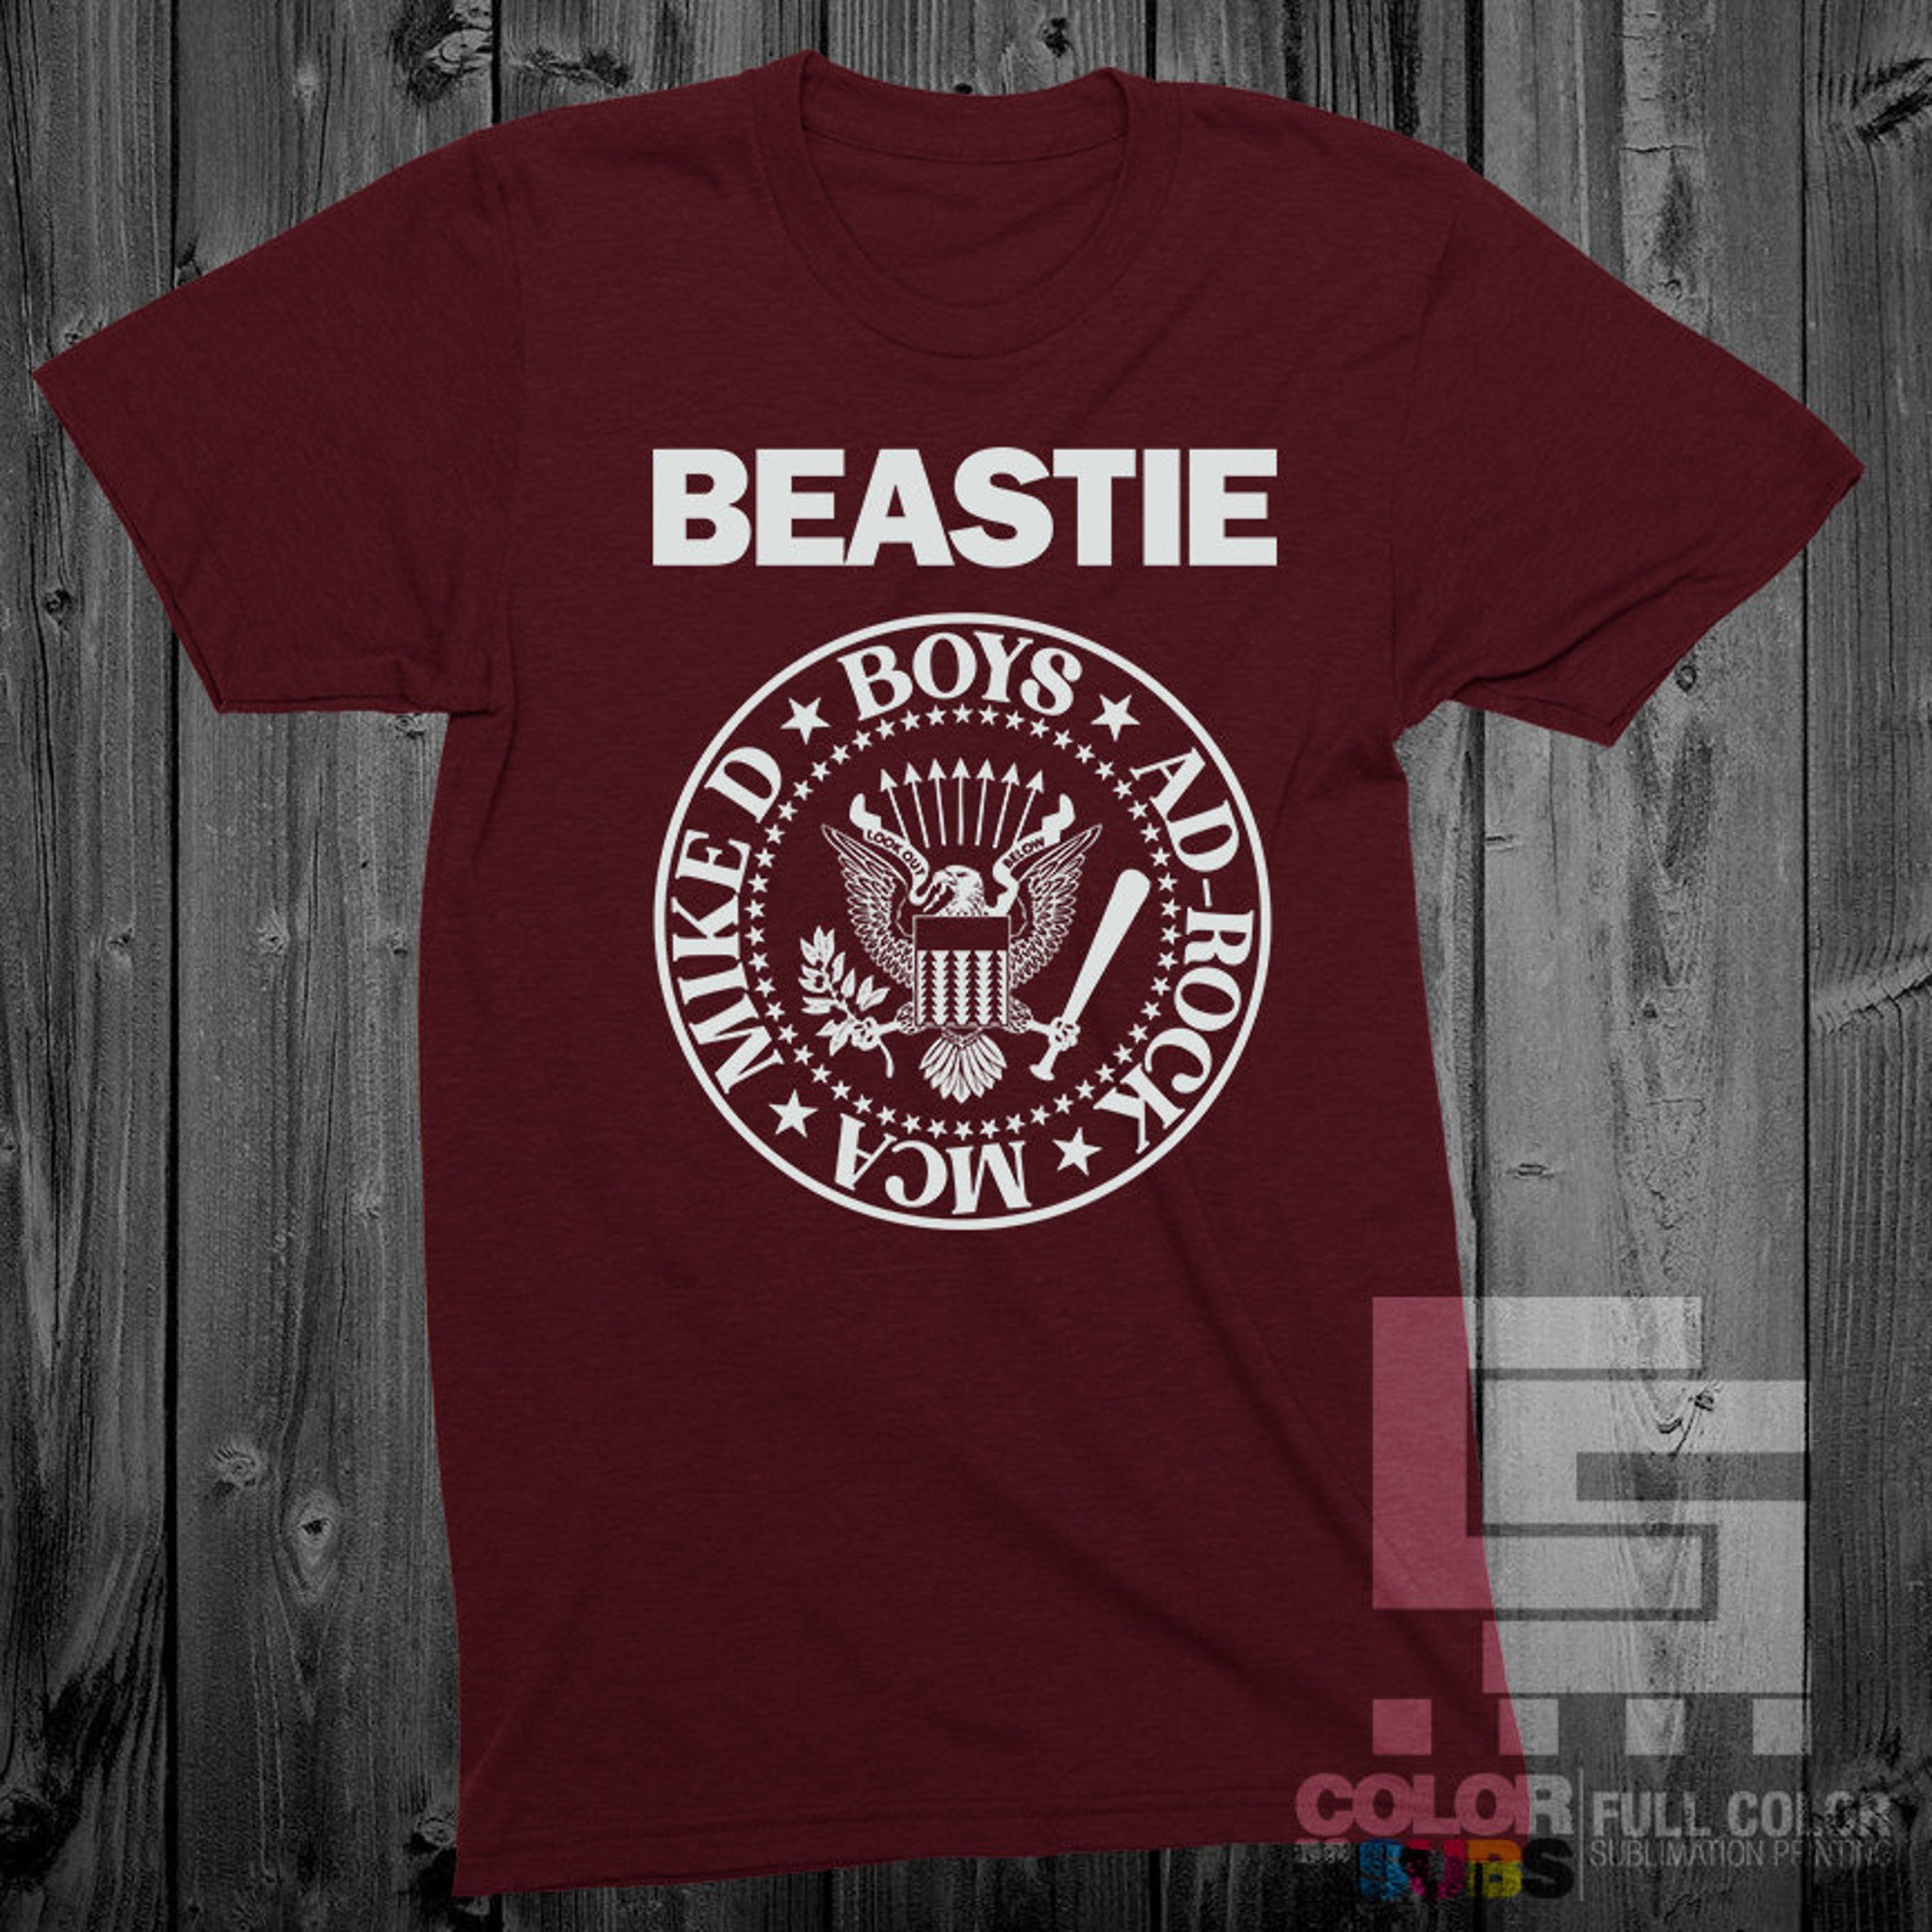 Discover Beastie Boys vs Ramones mashup T-shirt